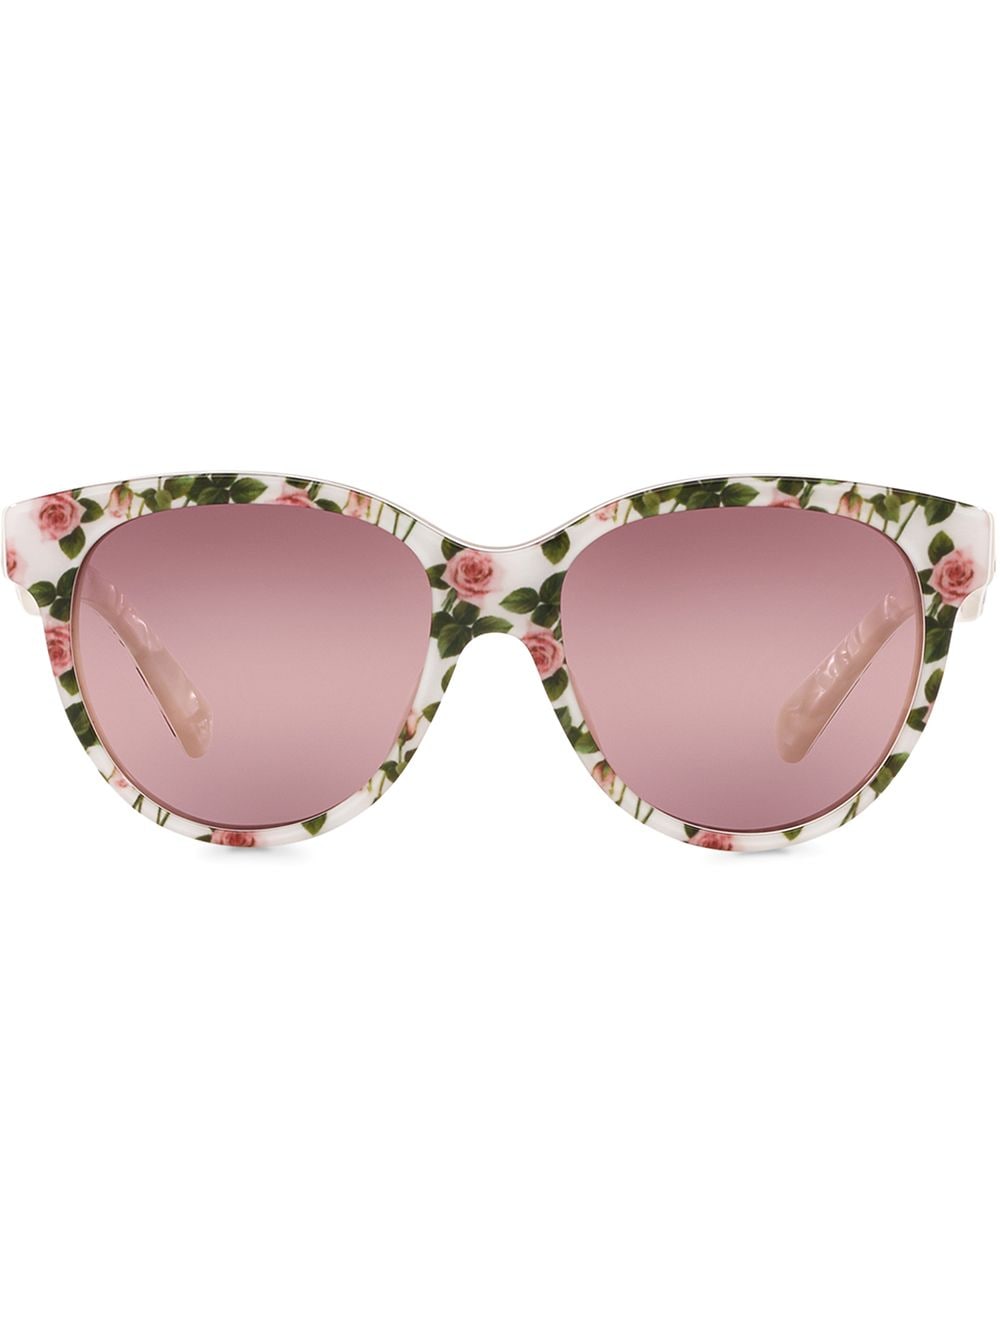 Image 1 of Dolce & Gabbana Eyewear Tropical Rose round-frame sunglasses